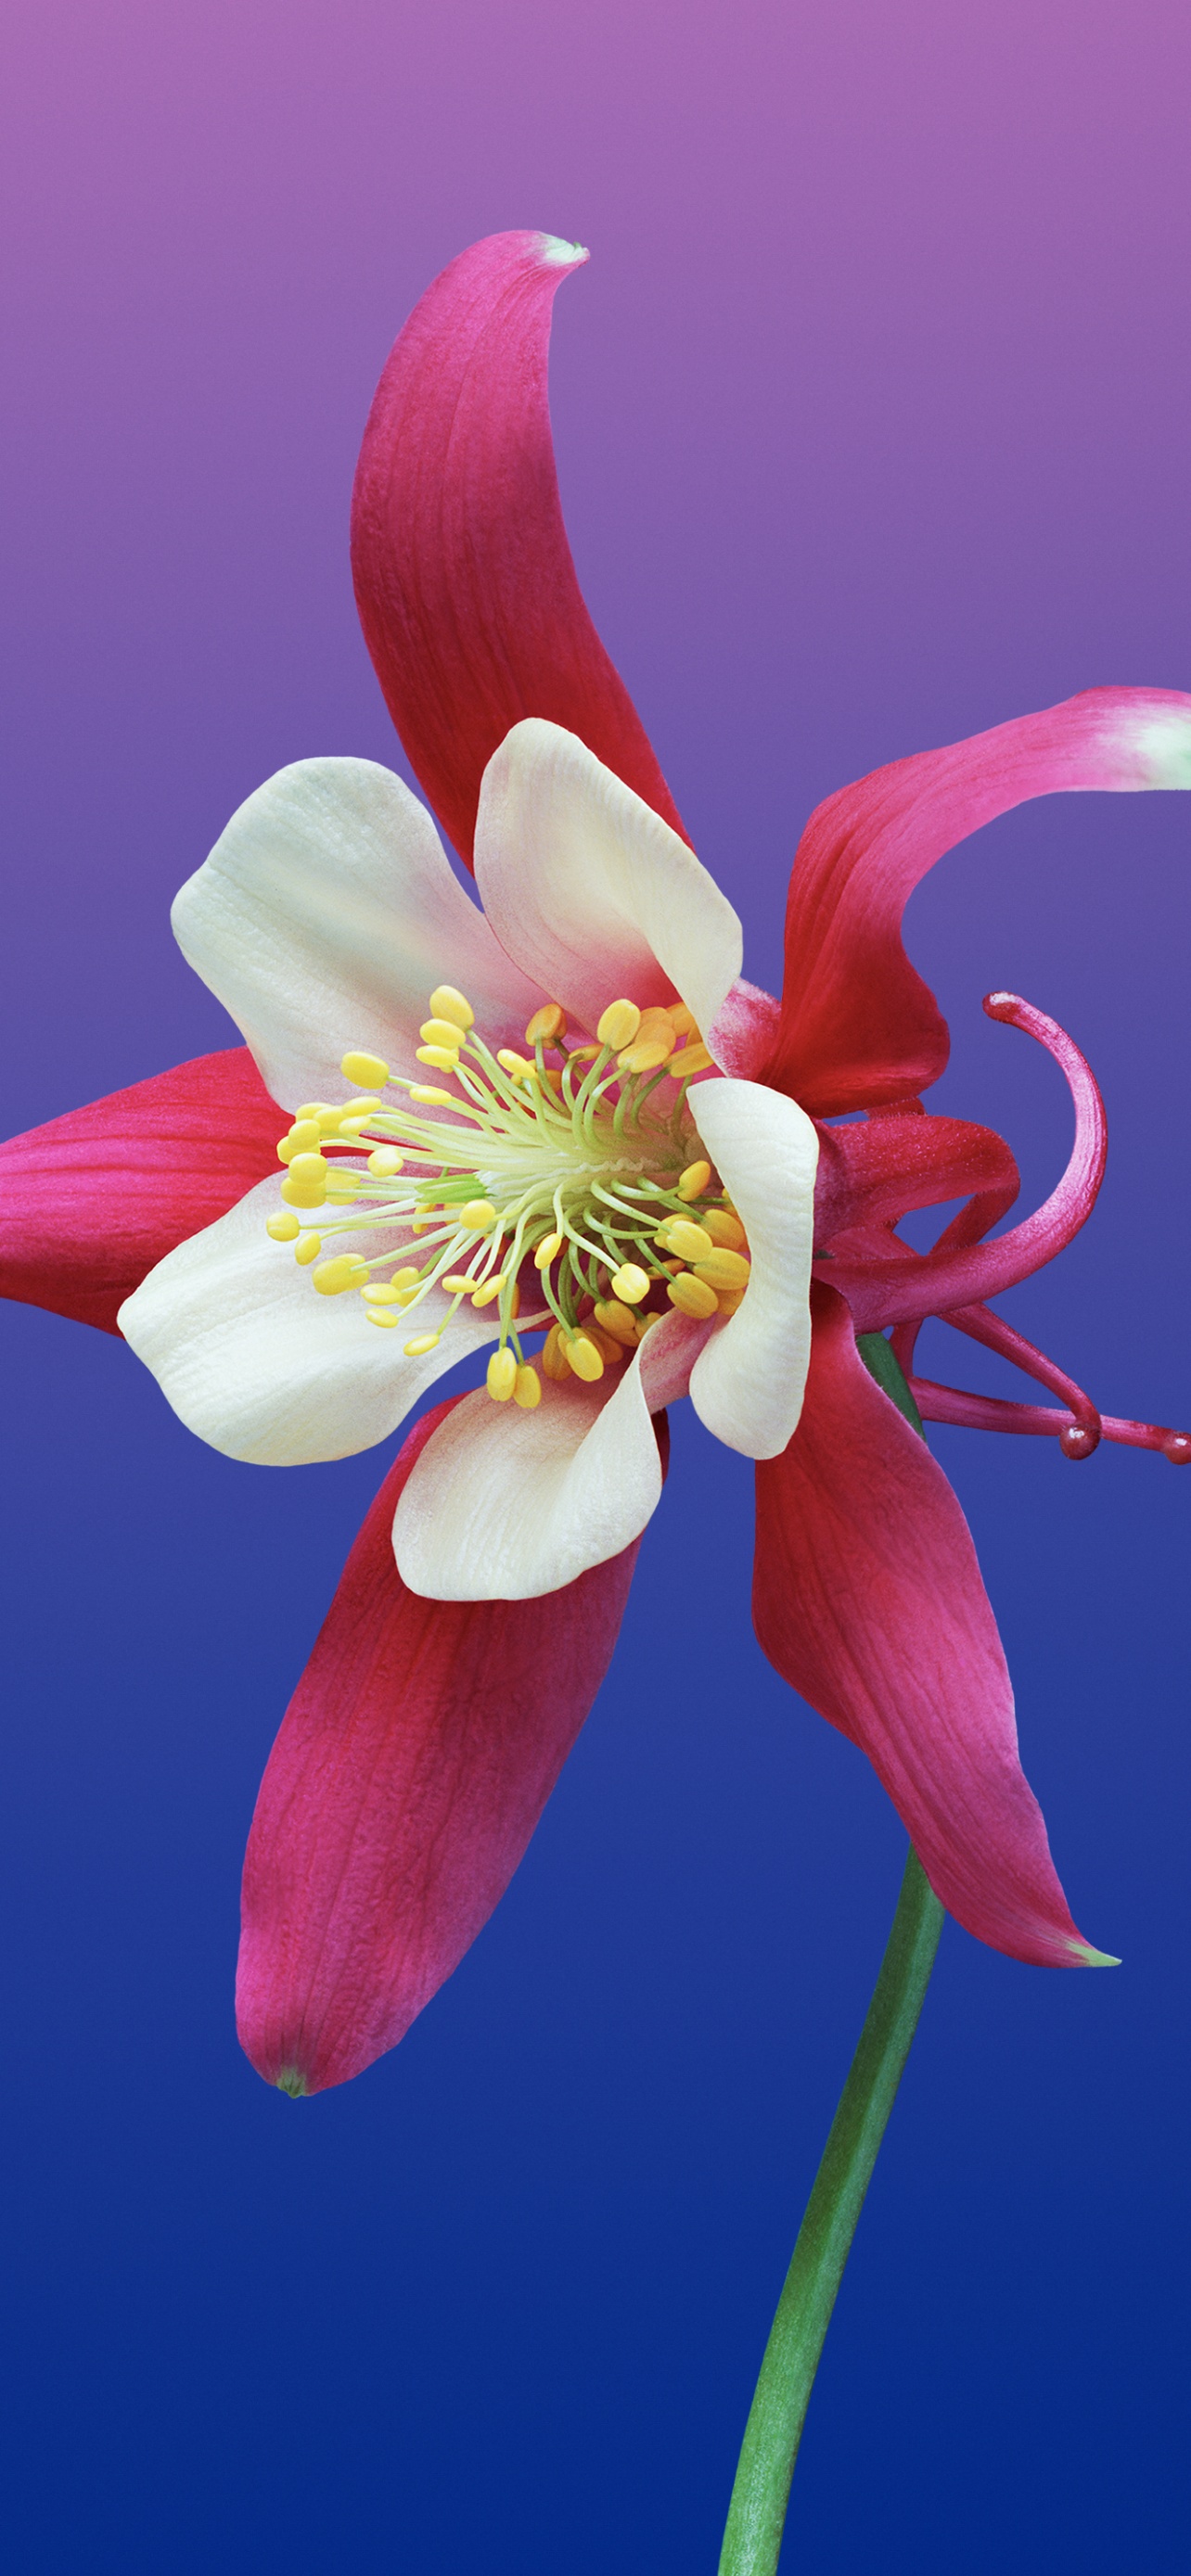 Aquilegia flower 4K Wallpaper, Gradient background, macOS Mojave, iOS